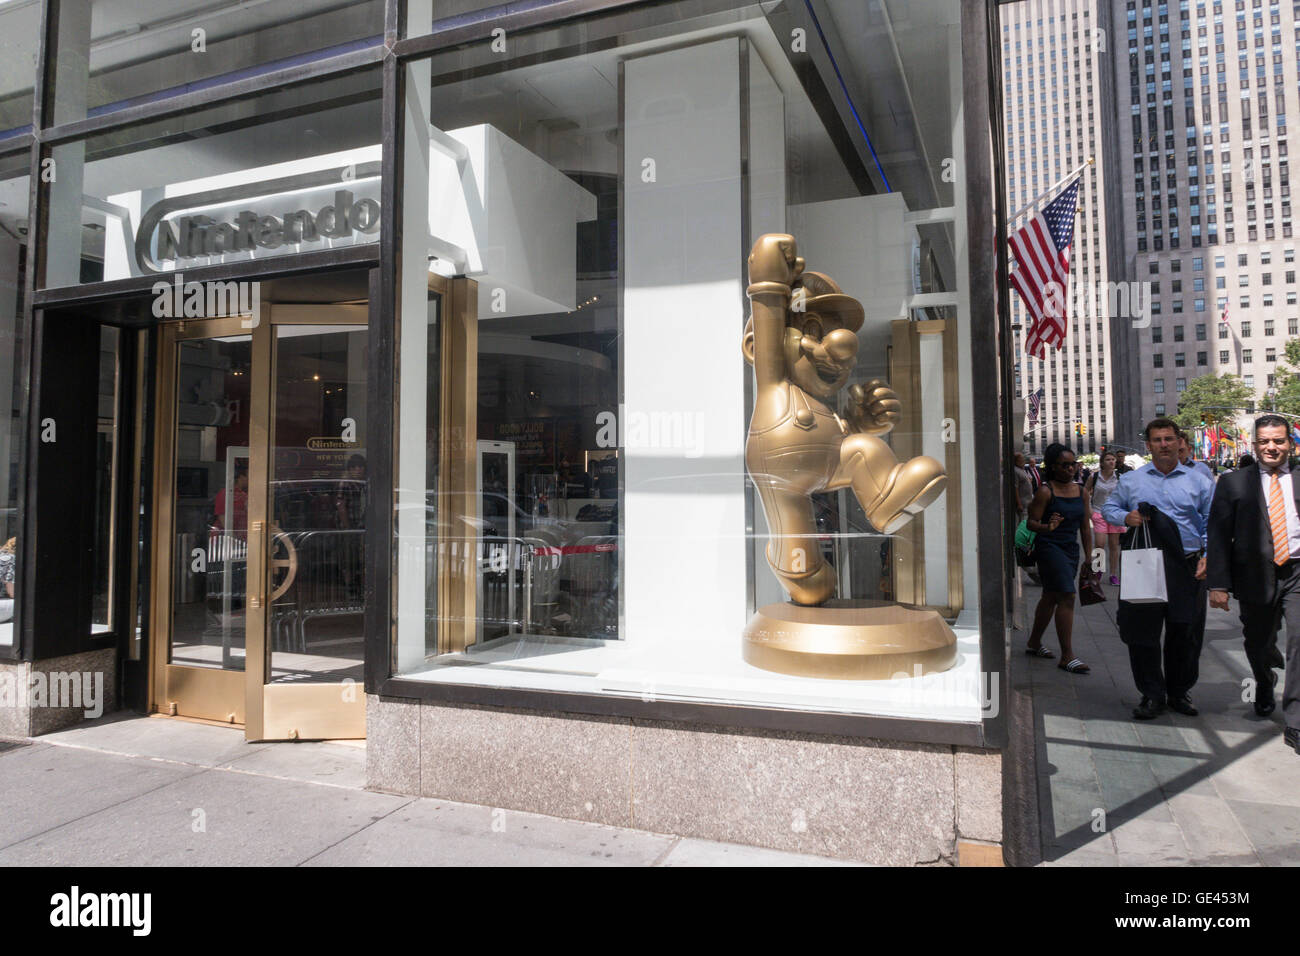 New York Nintendo Store intérieur, Rockefeller Center, NEW YORK, USA Banque D'Images